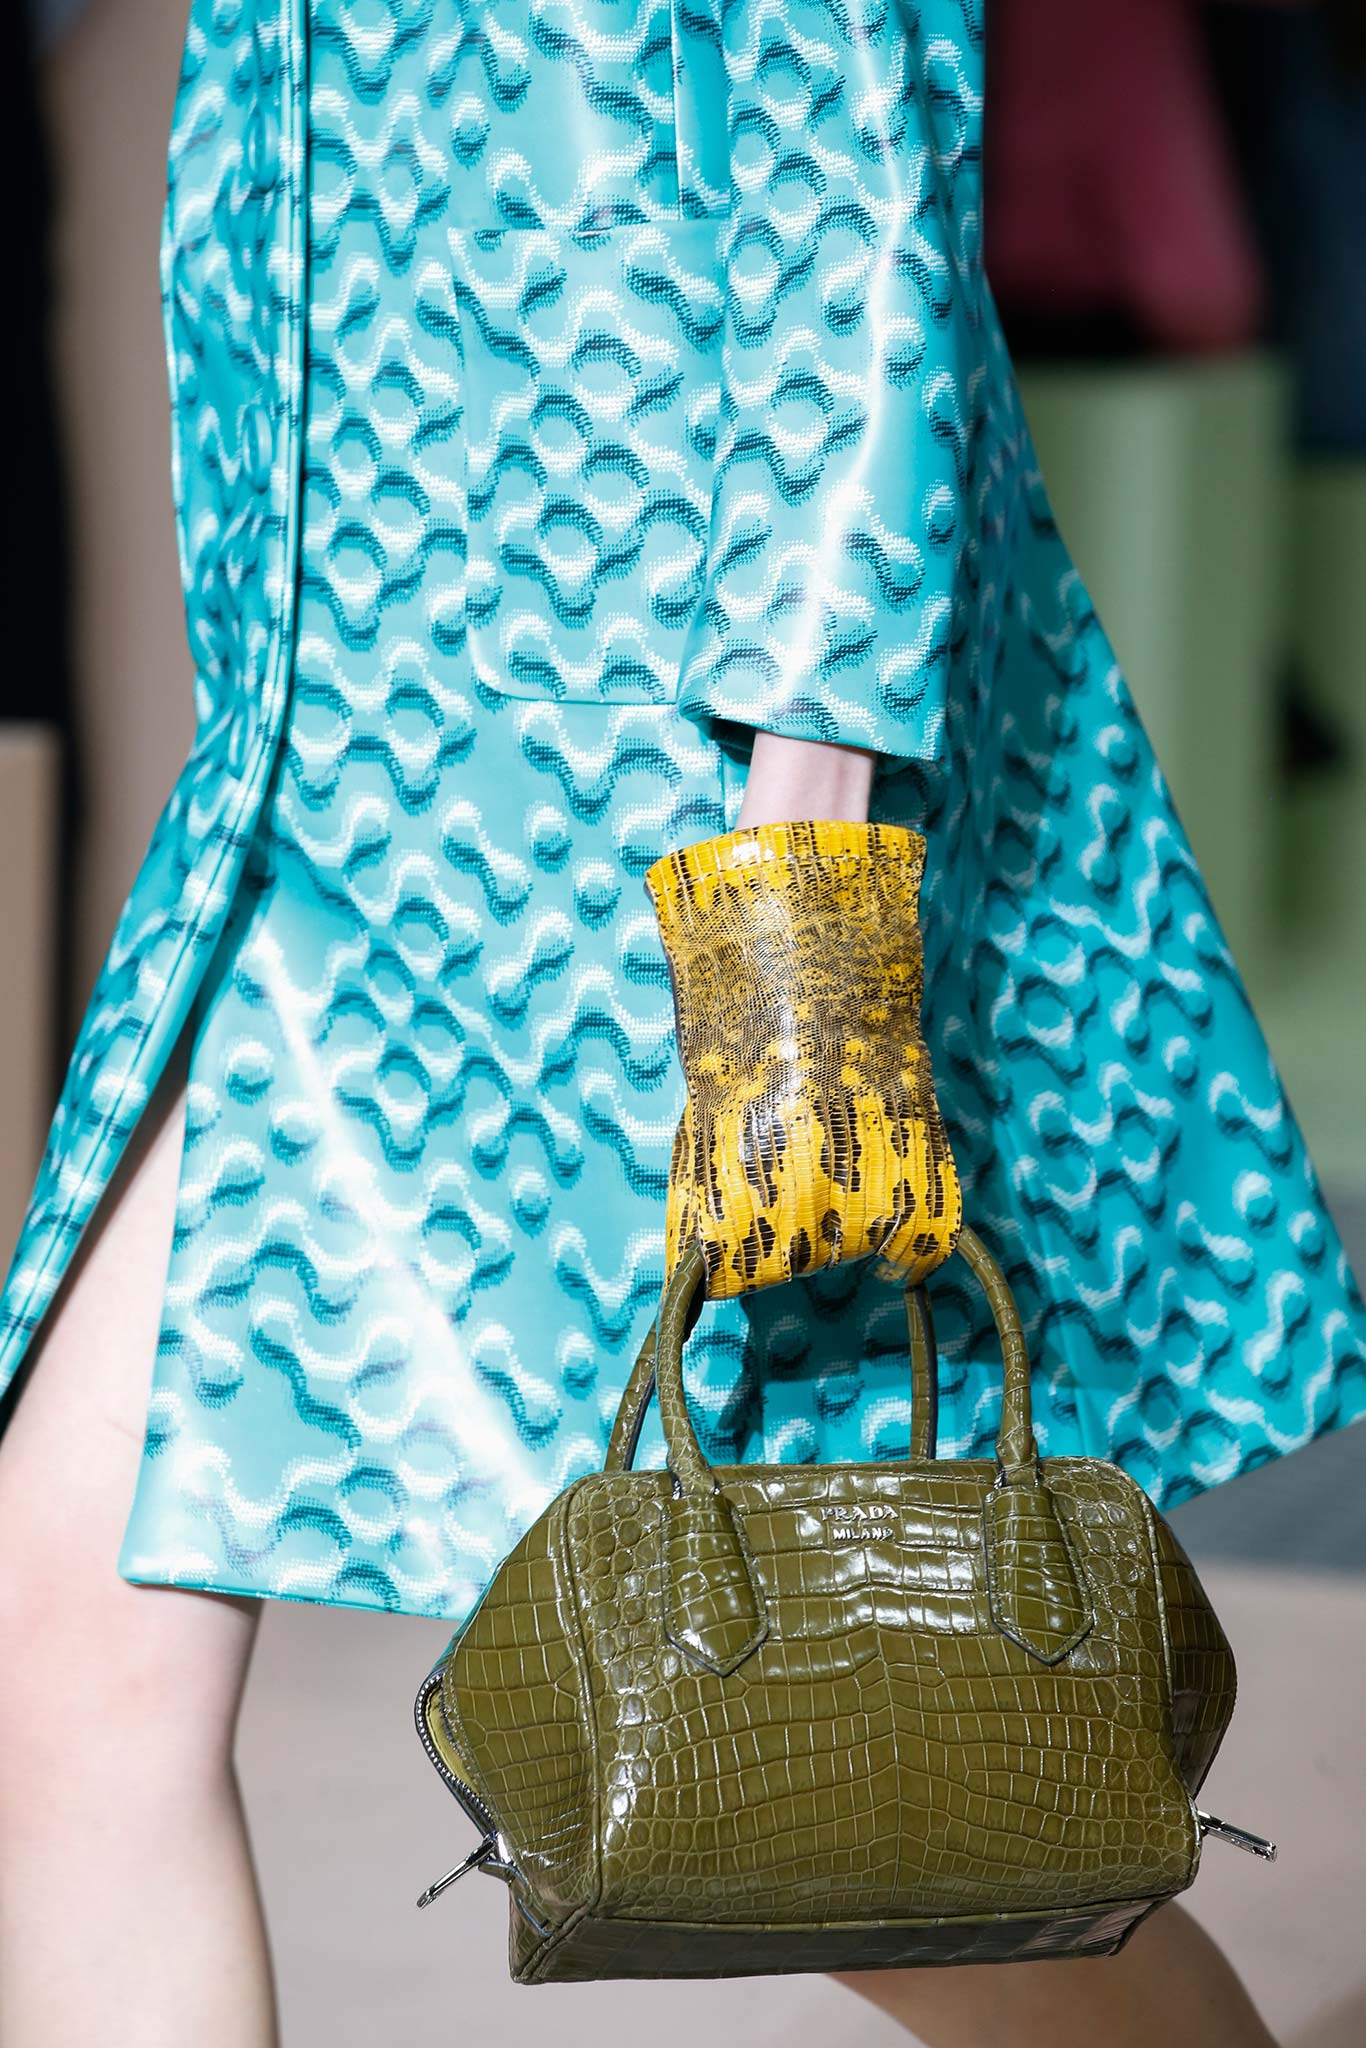 Prada Fall/Winter 2015 Runway Bag Collection Featuring Pastel